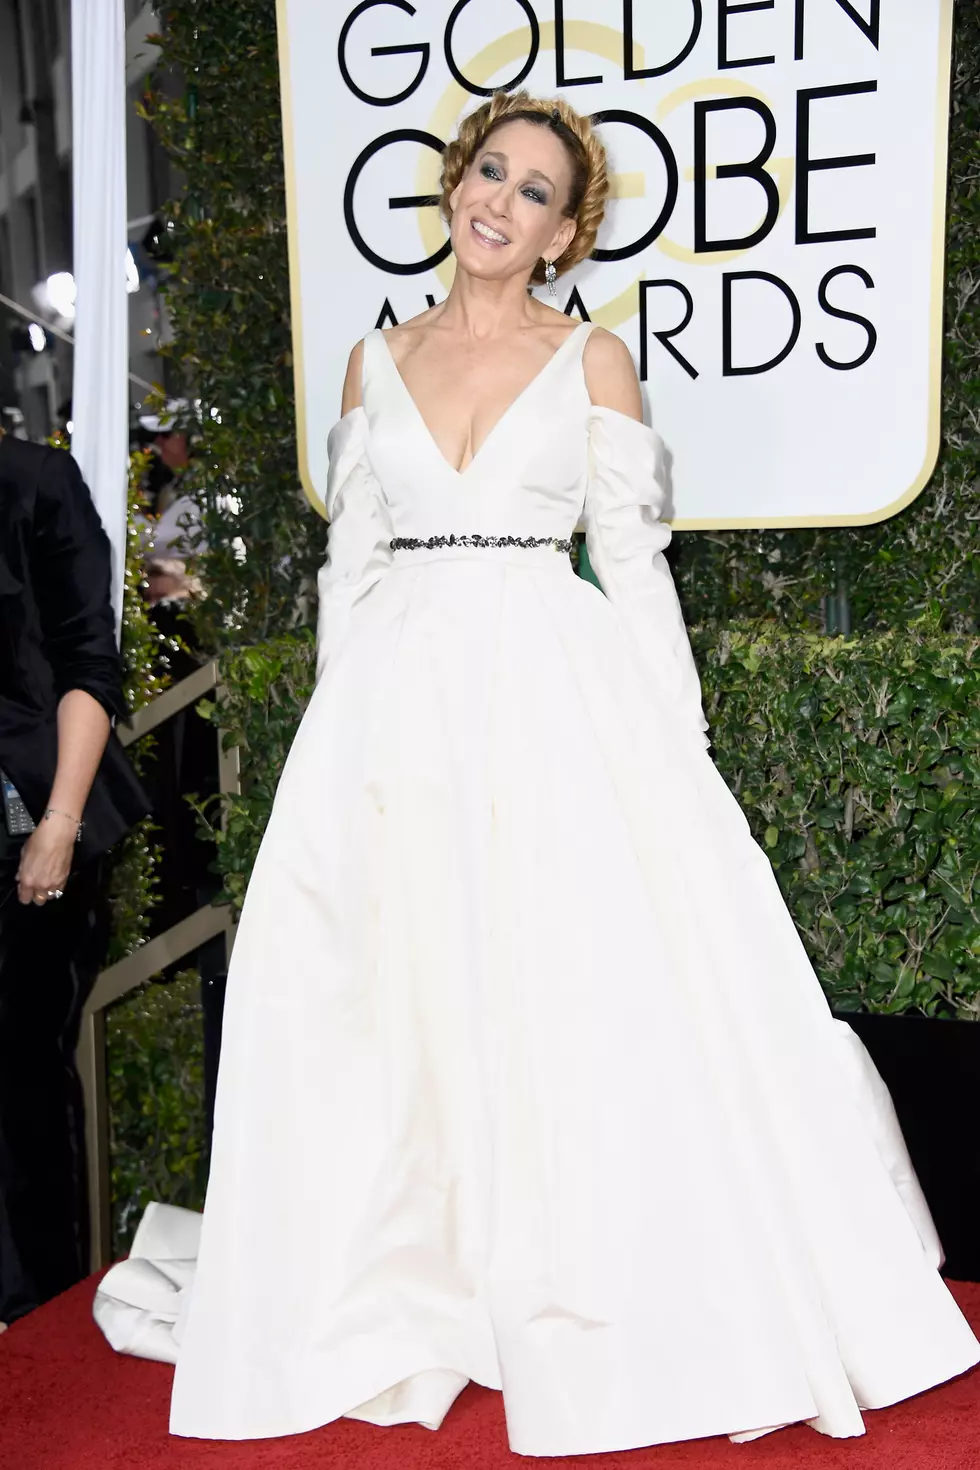 Sarah Jessica Parker Goes Bridal at the 2017 Golden Globes